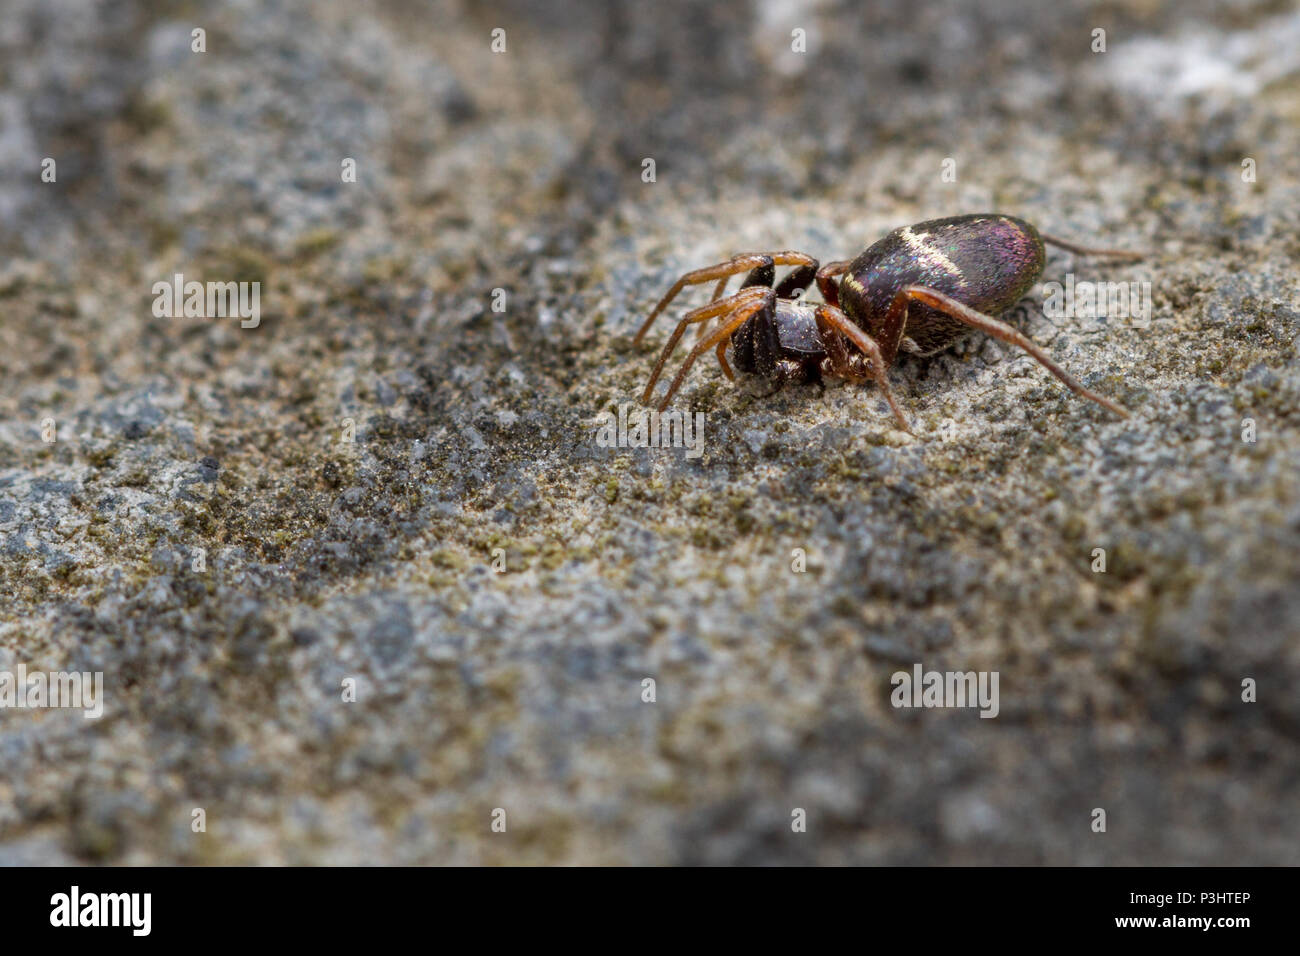 UK wildlife: the glossy ant mimic spider Stock Photo